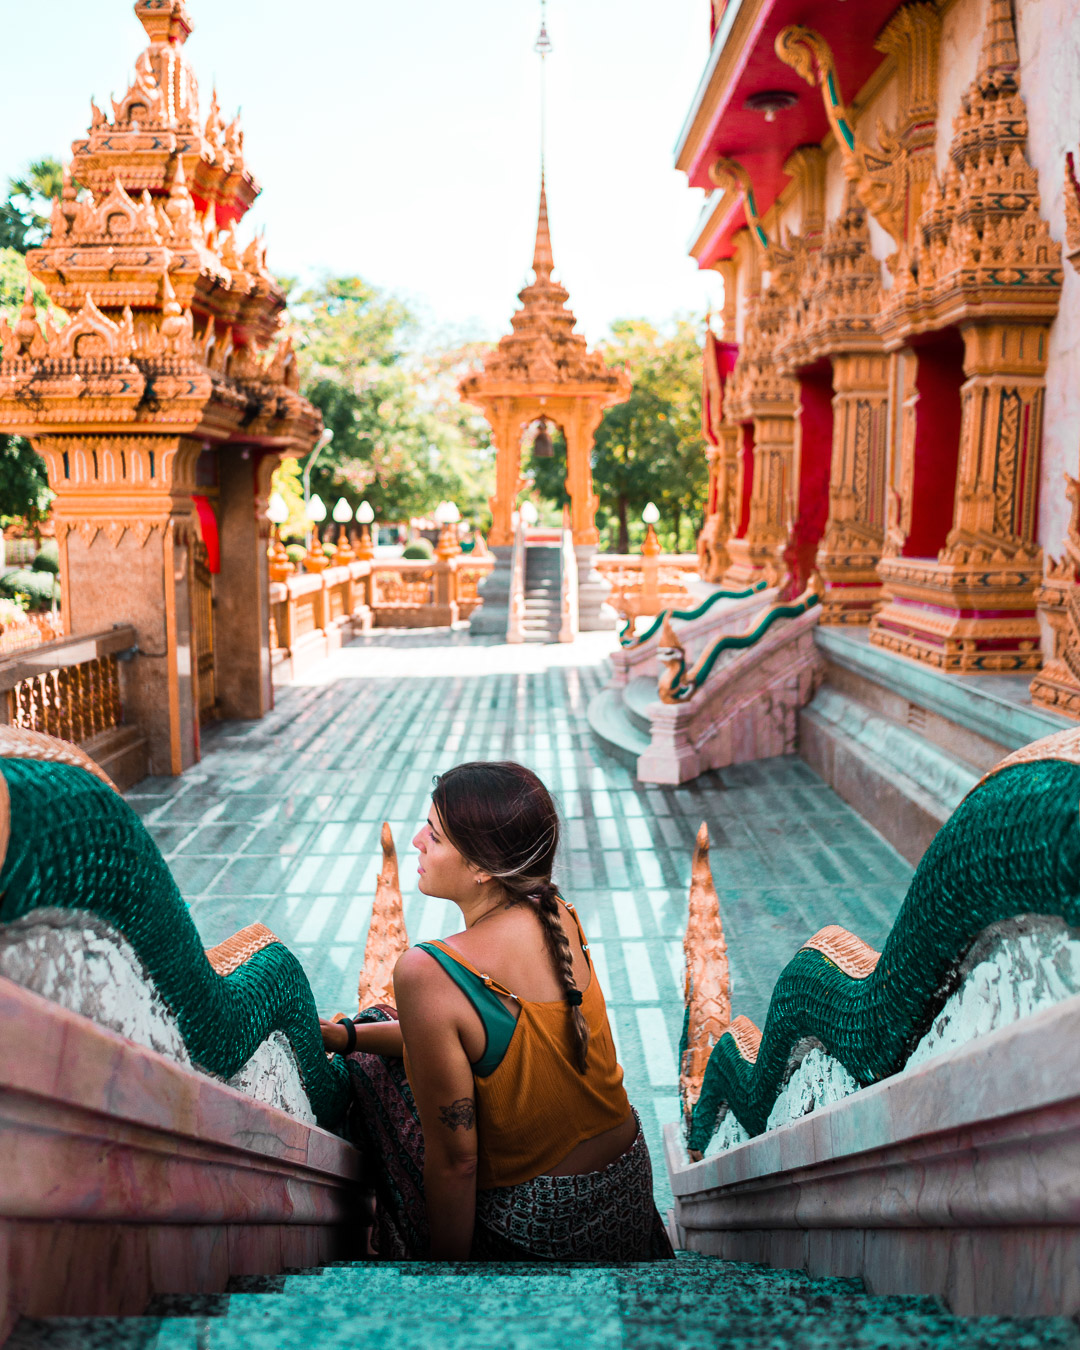 templo-phuket-tailandia-vivir-viajando-welcome-to-el-mundo-entrevista